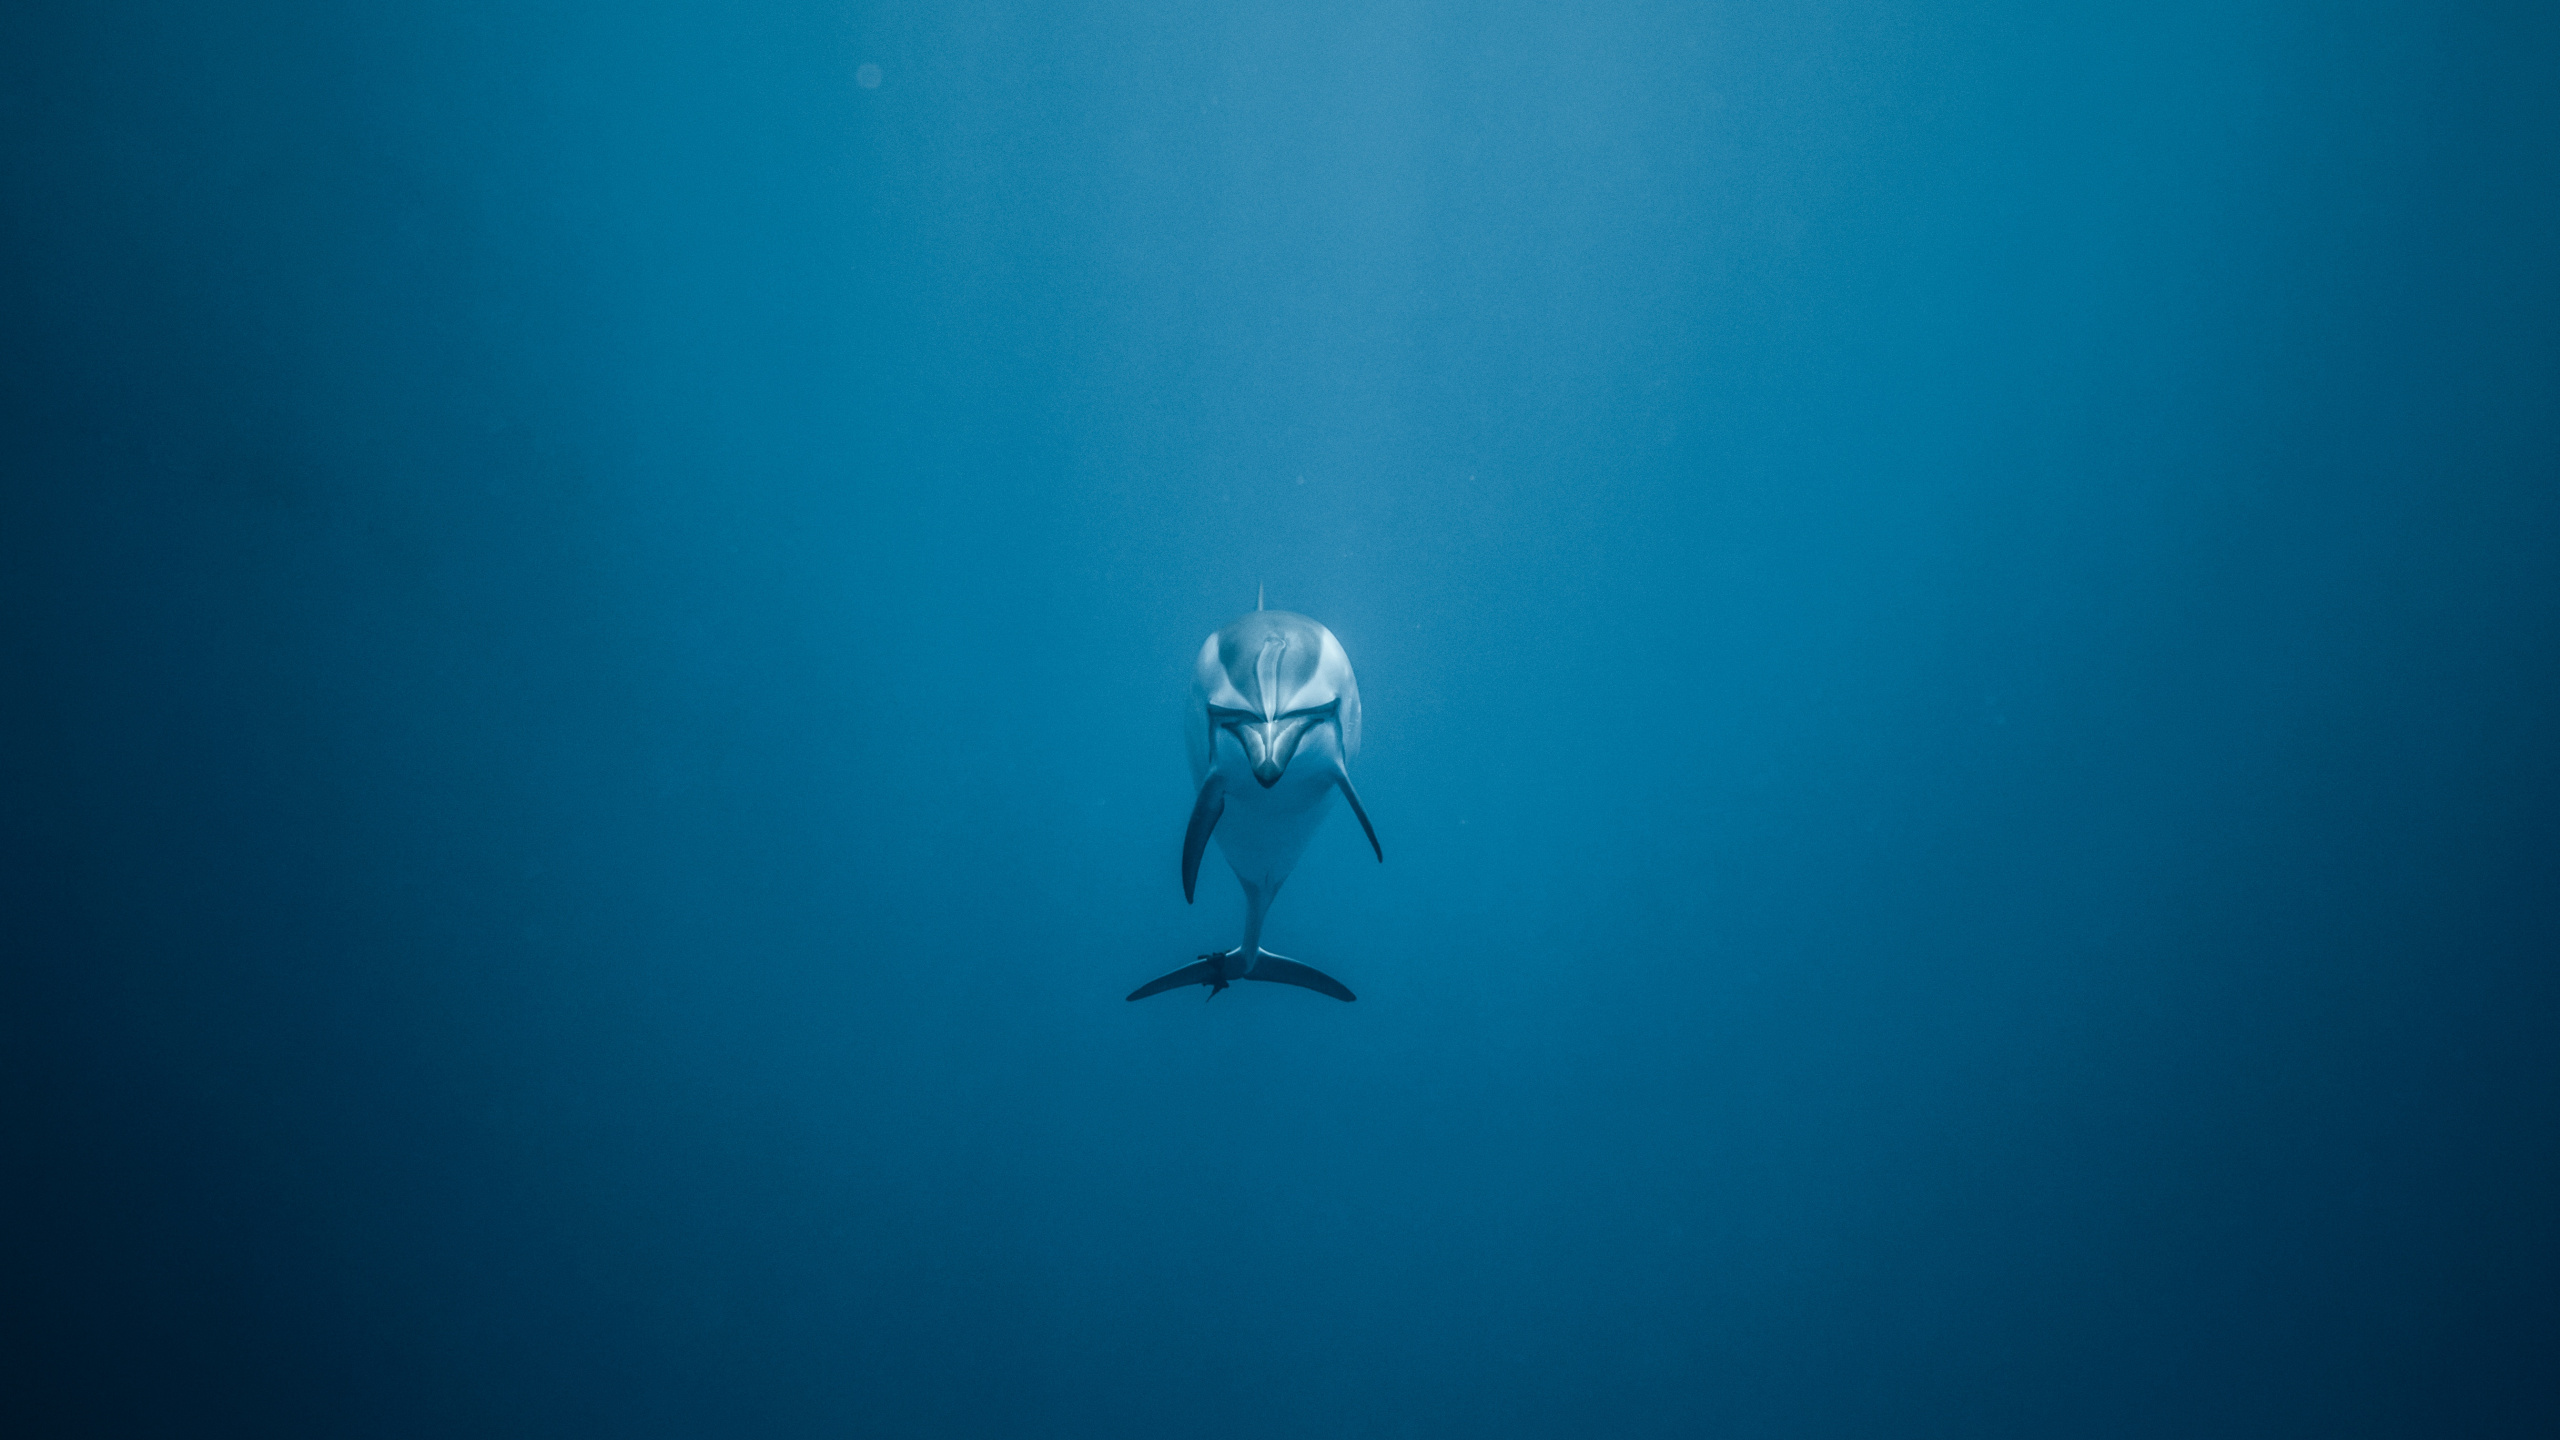 Woman in Black and White Bikini Swimming in The Sea. Wallpaper in 2560x1440 Resolution